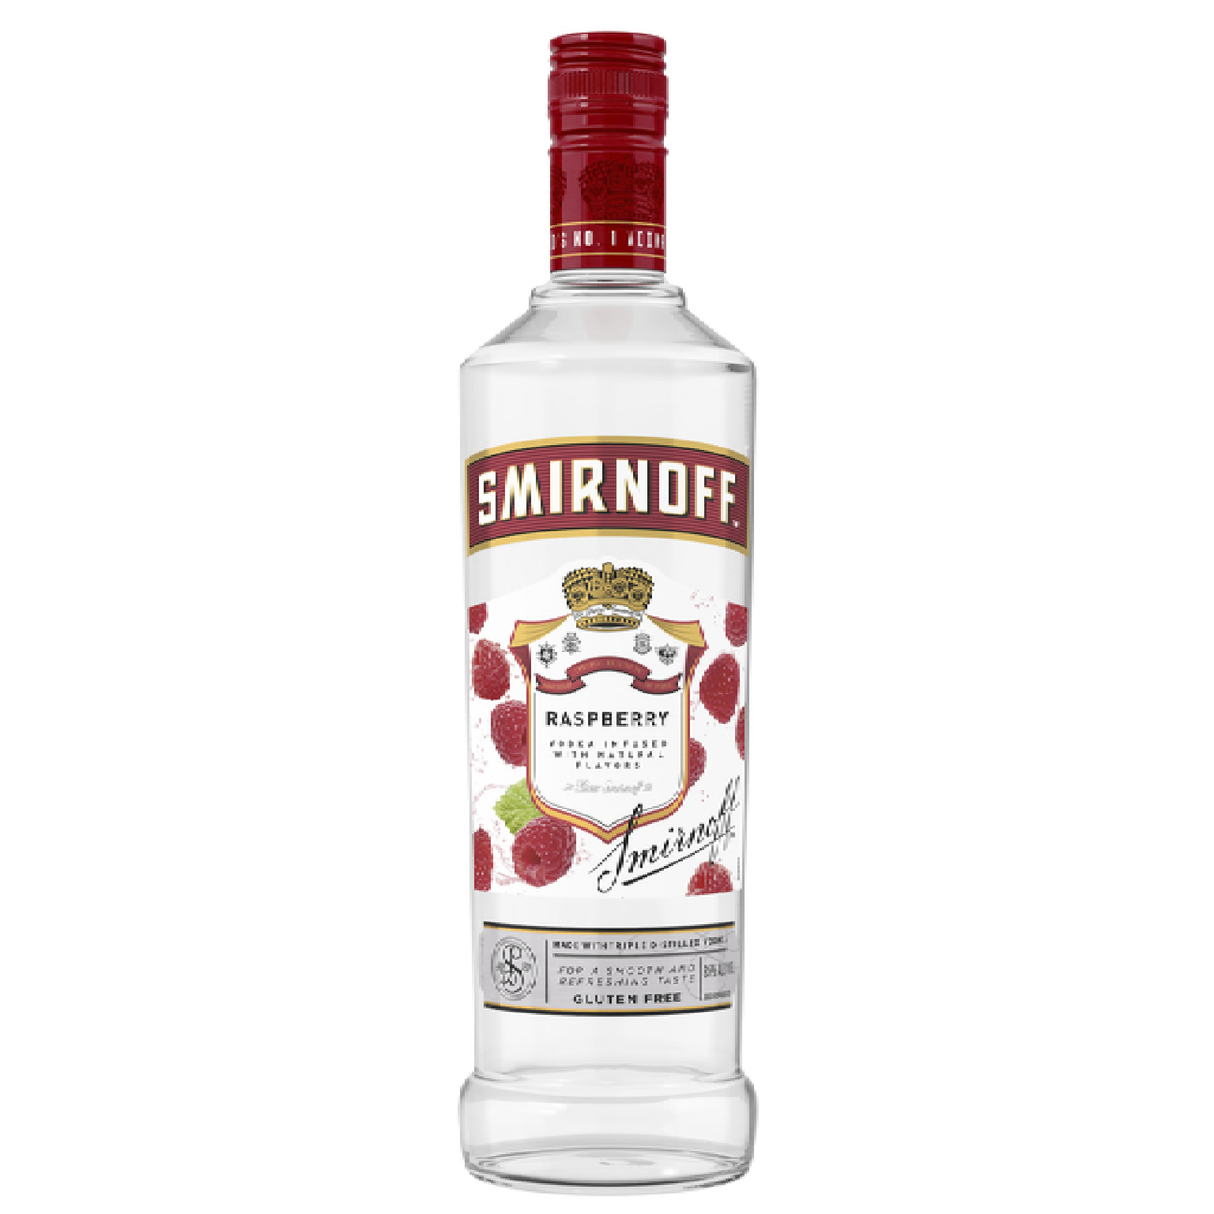 Smirnoff Raspberry Flavored Vodka - Liquor Geeks